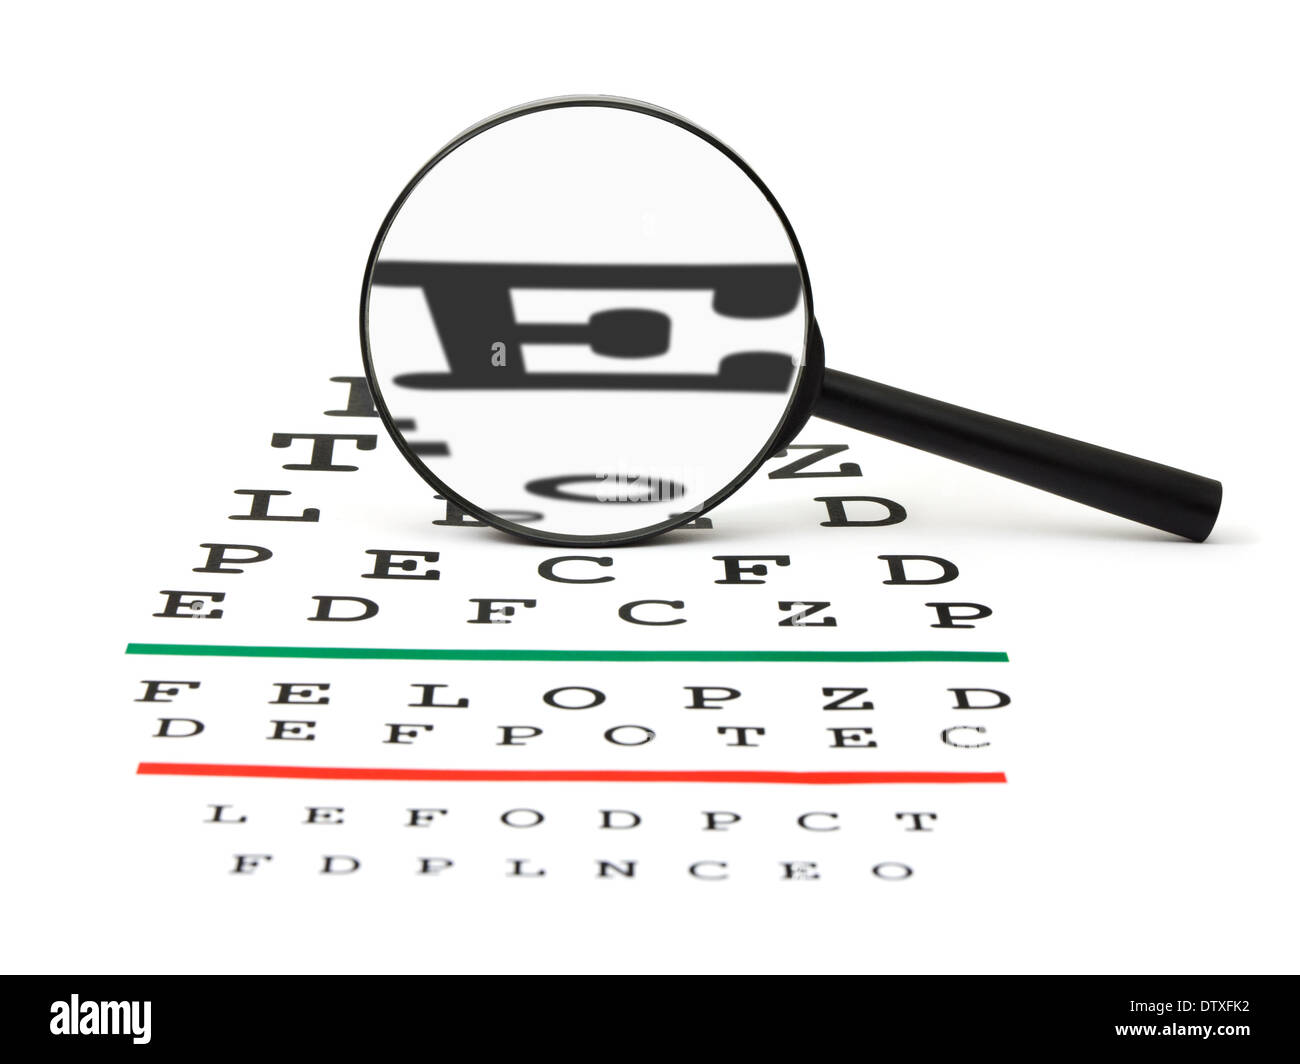 https://c8.alamy.com/comp/DTXFK2/magnifier-on-eyesight-test-chart-DTXFK2.jpg